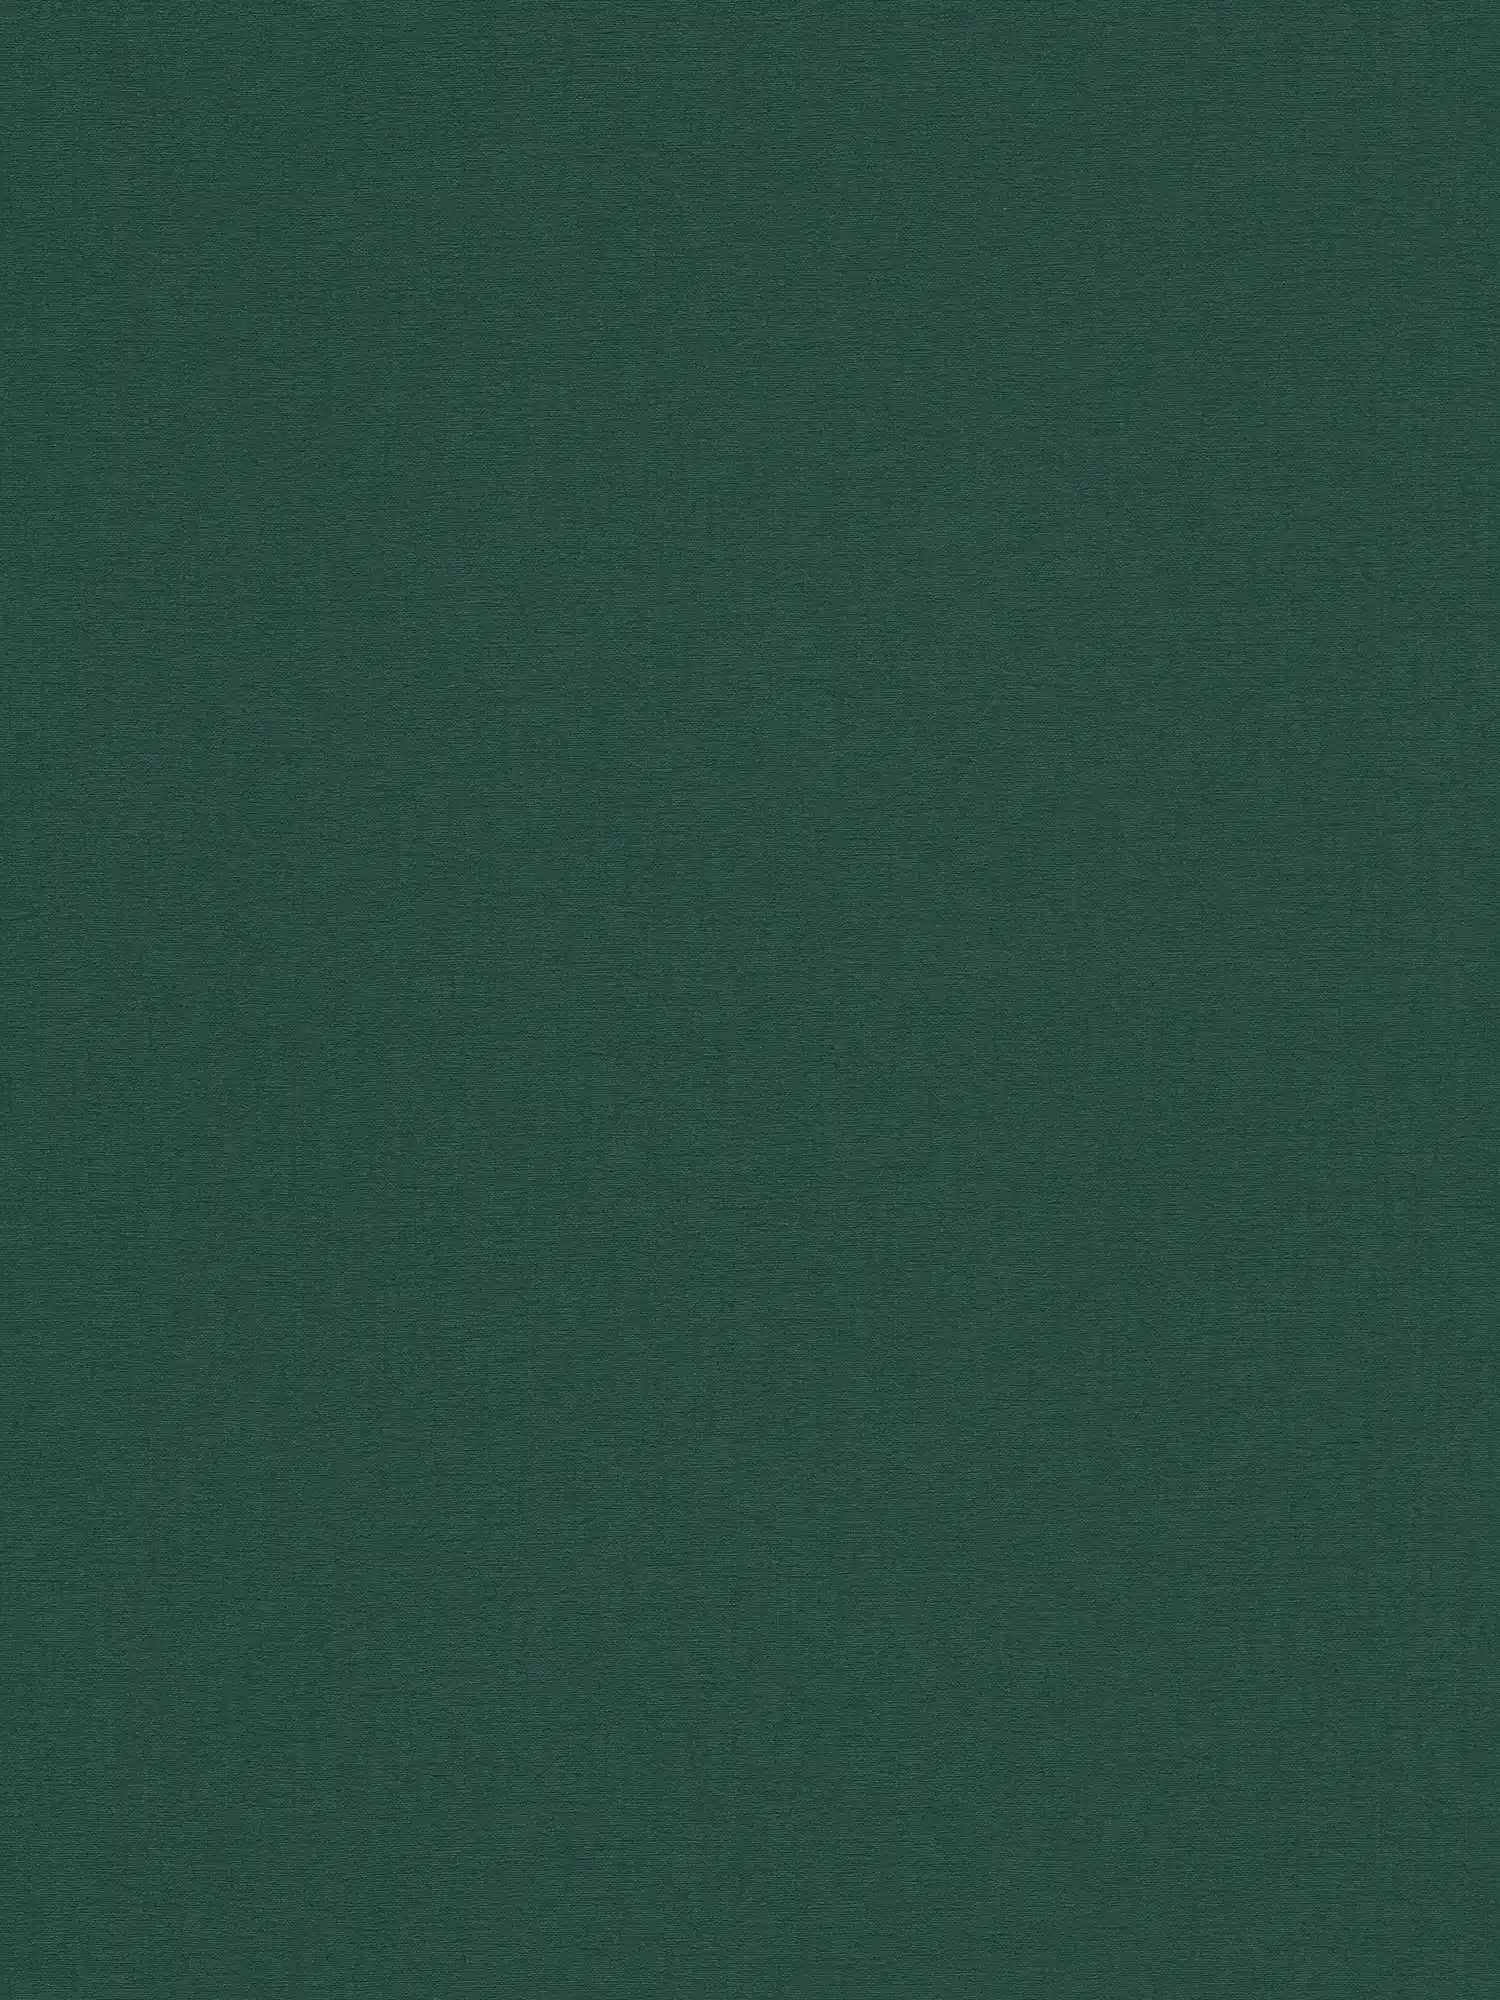 Carta da parati unitaria con texture tessile opaca - verde, verde scuro
